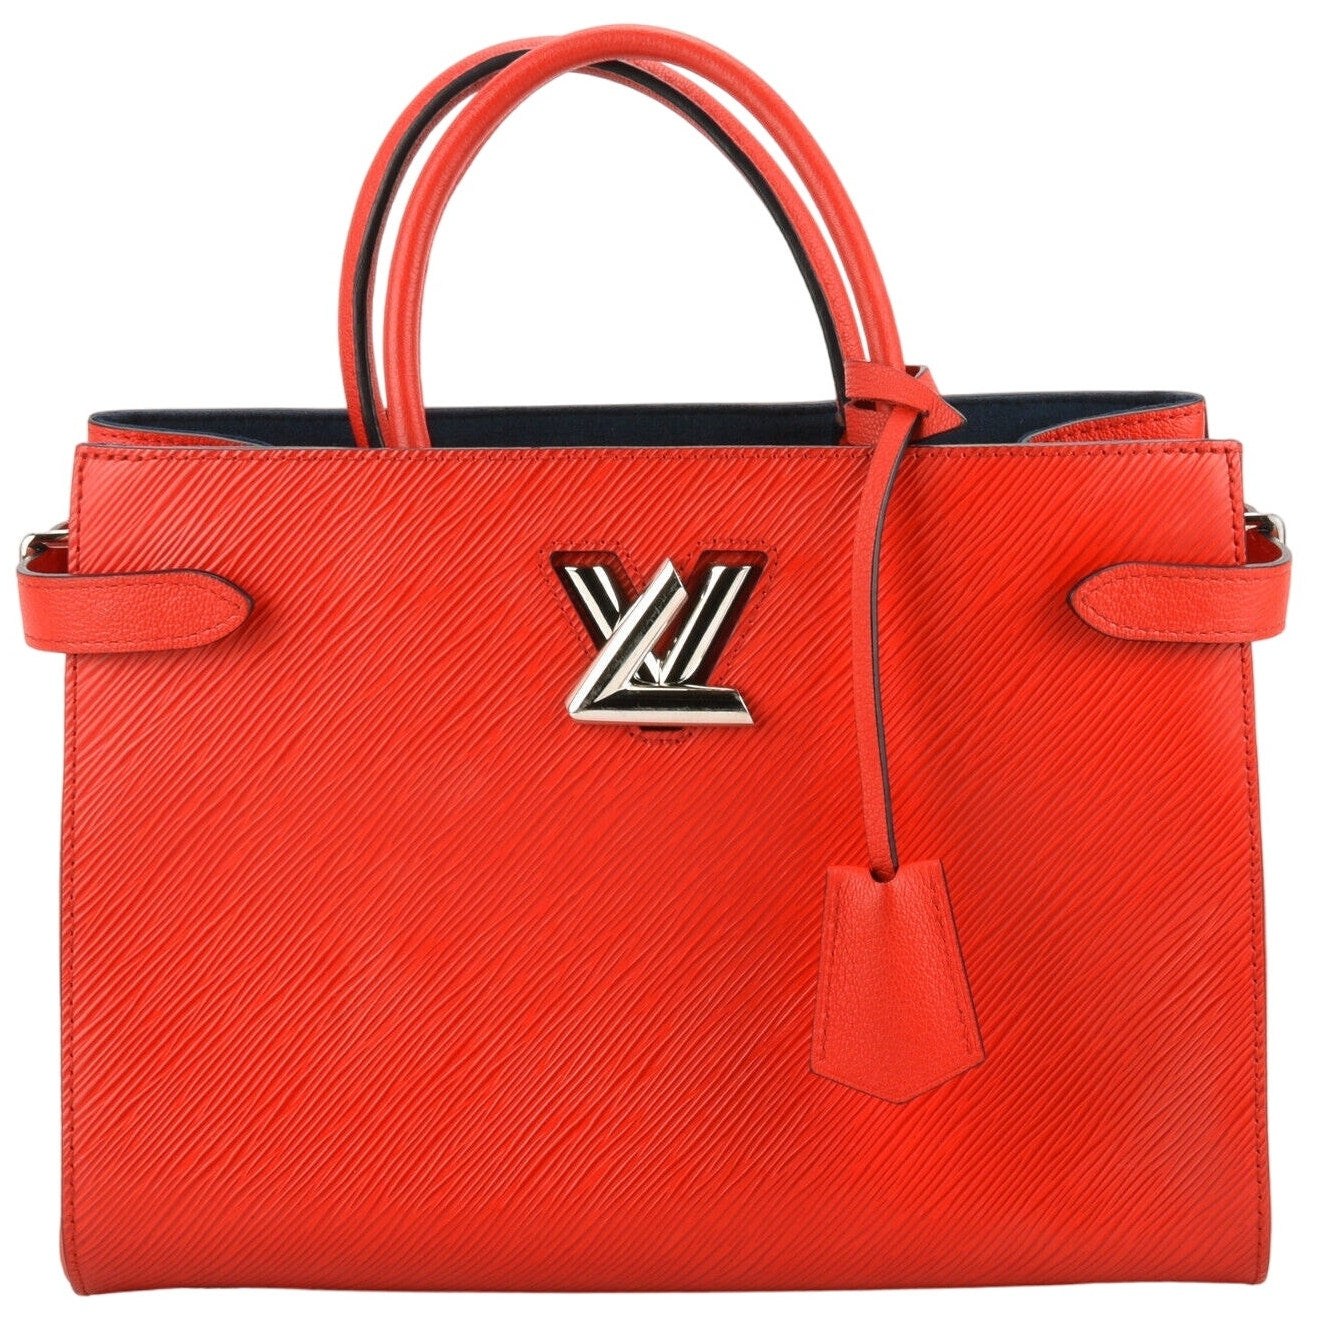 Authentic Louis Vuitton Twist Tote Epi Red Handbag